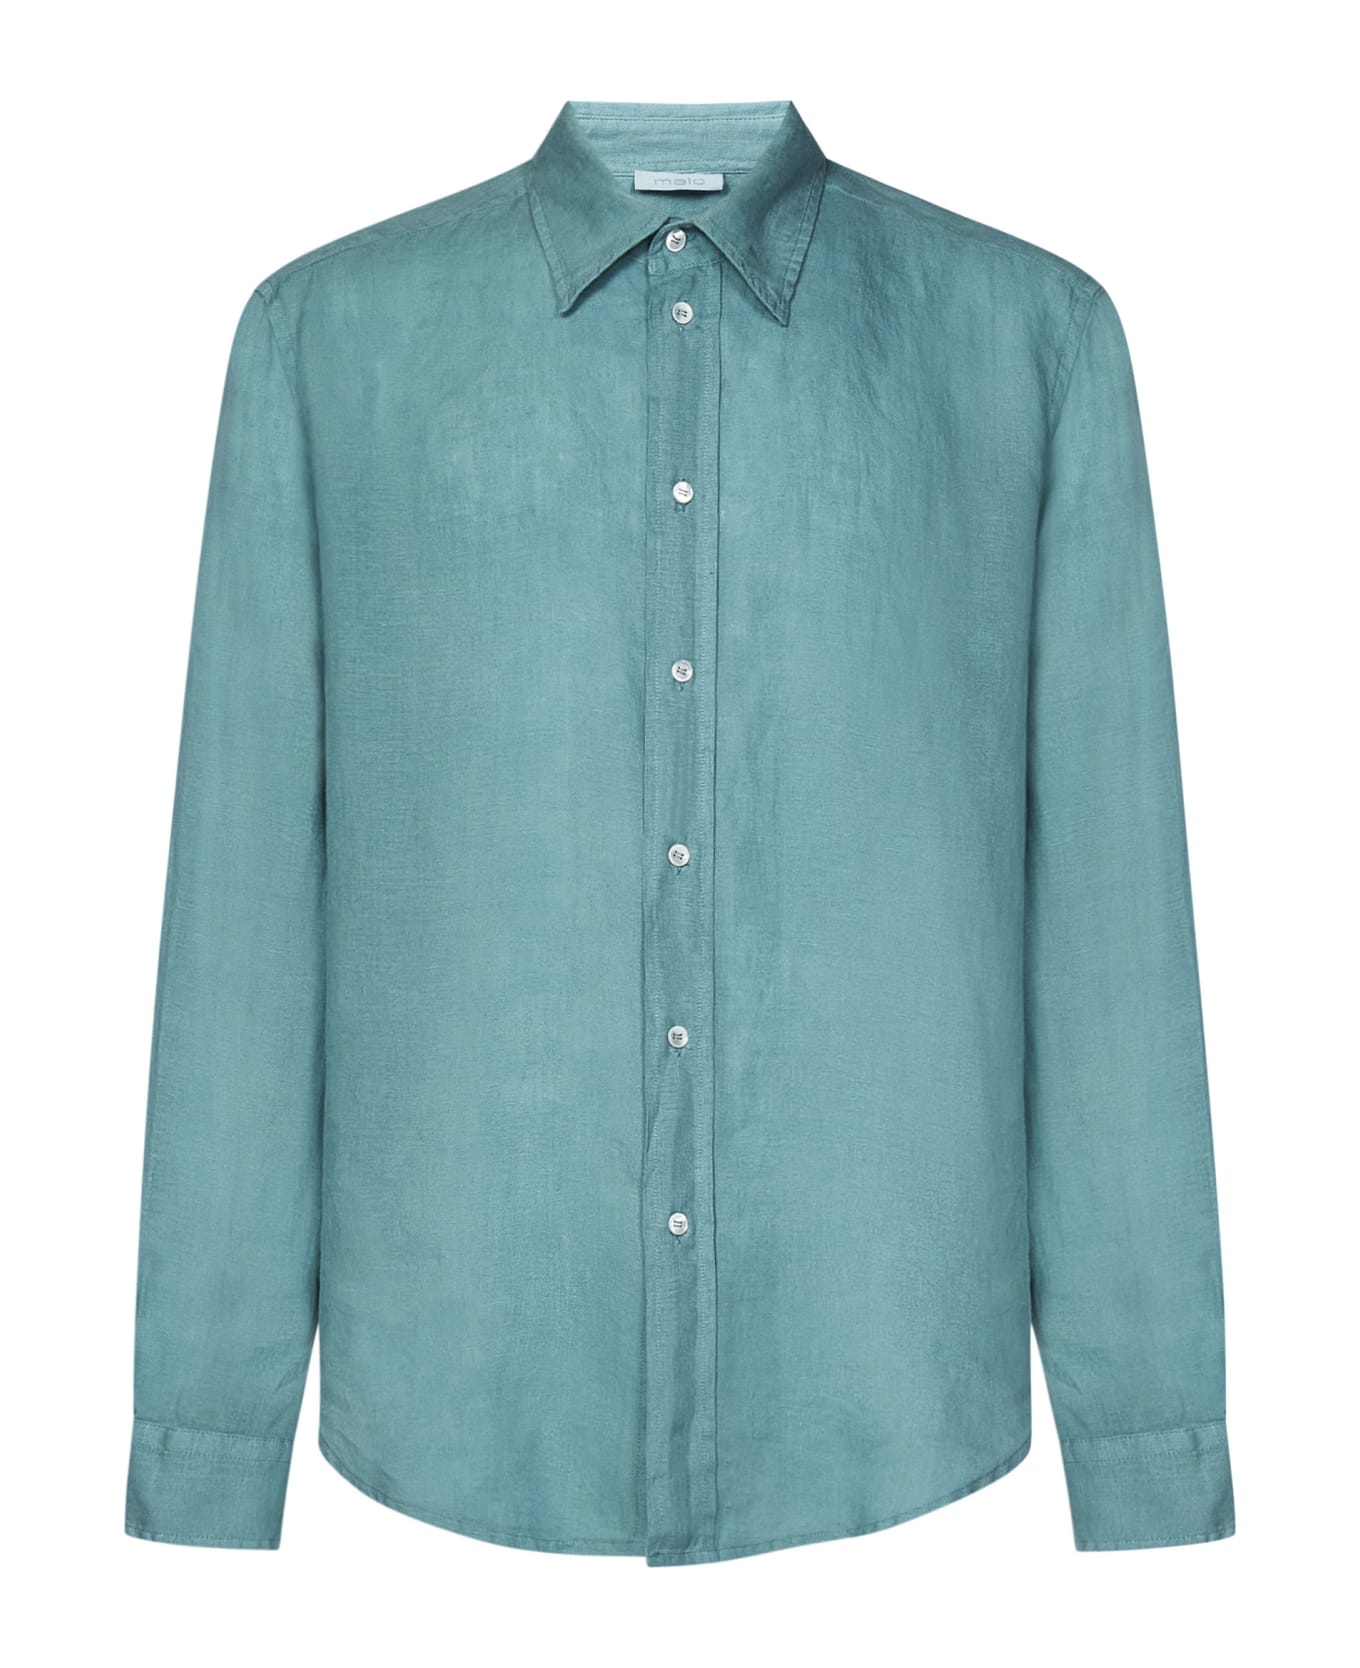 Malo Shirt - Turquoise シャツ